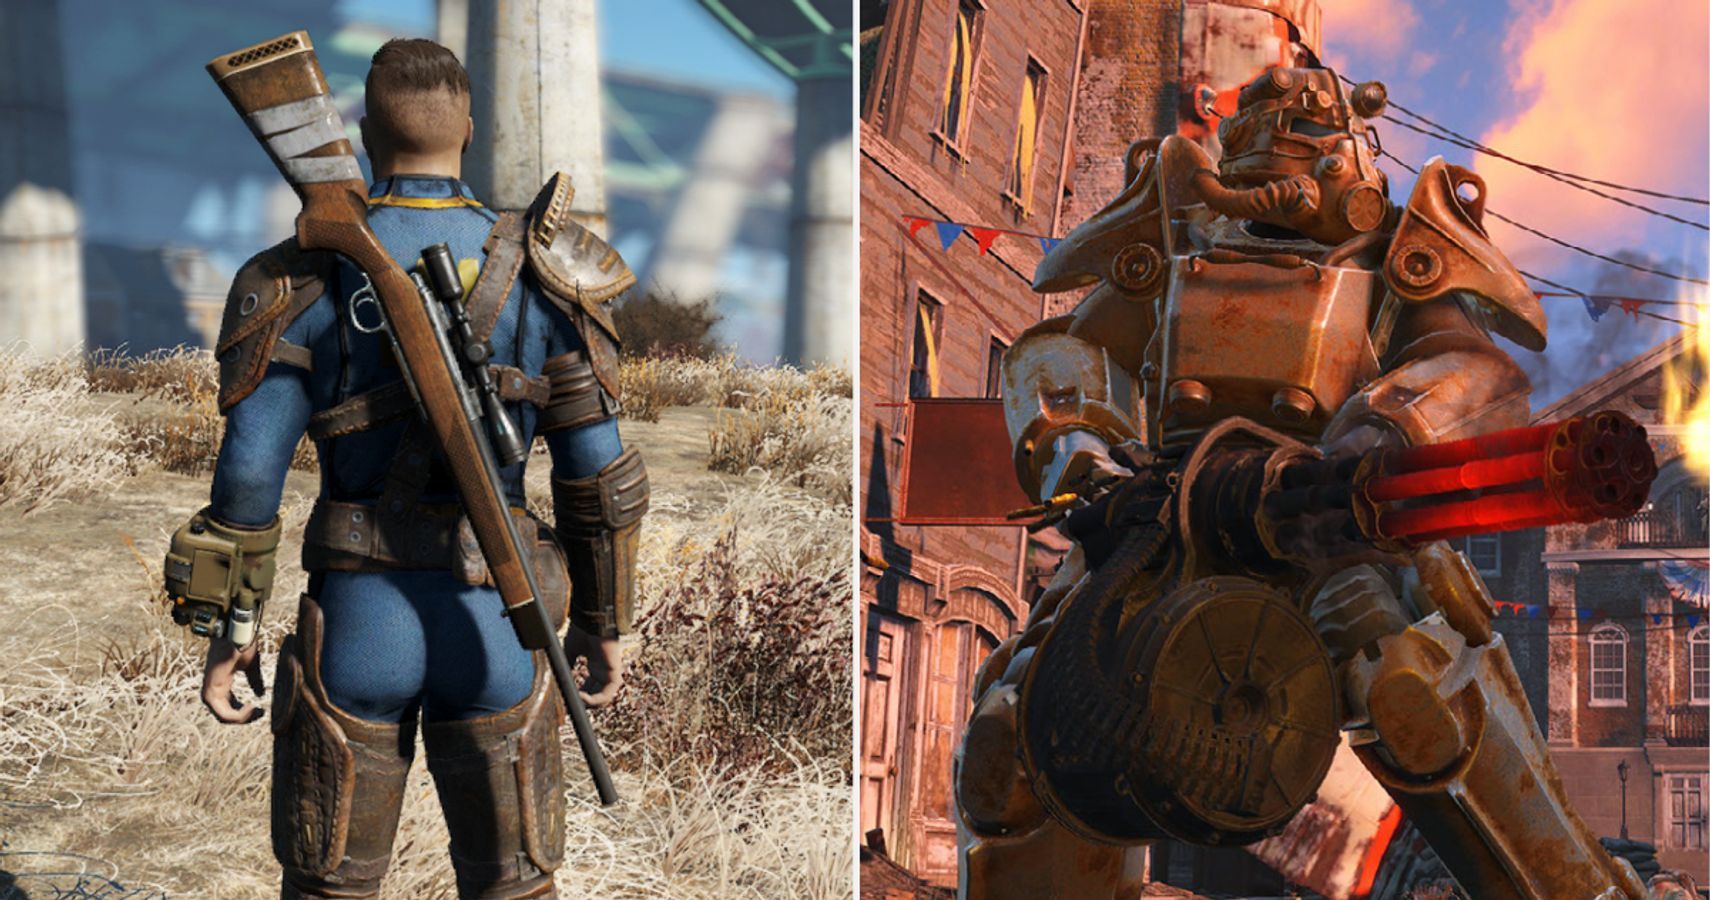 Fallout 4 Rifle and Minigun wielded by Sole Survivor